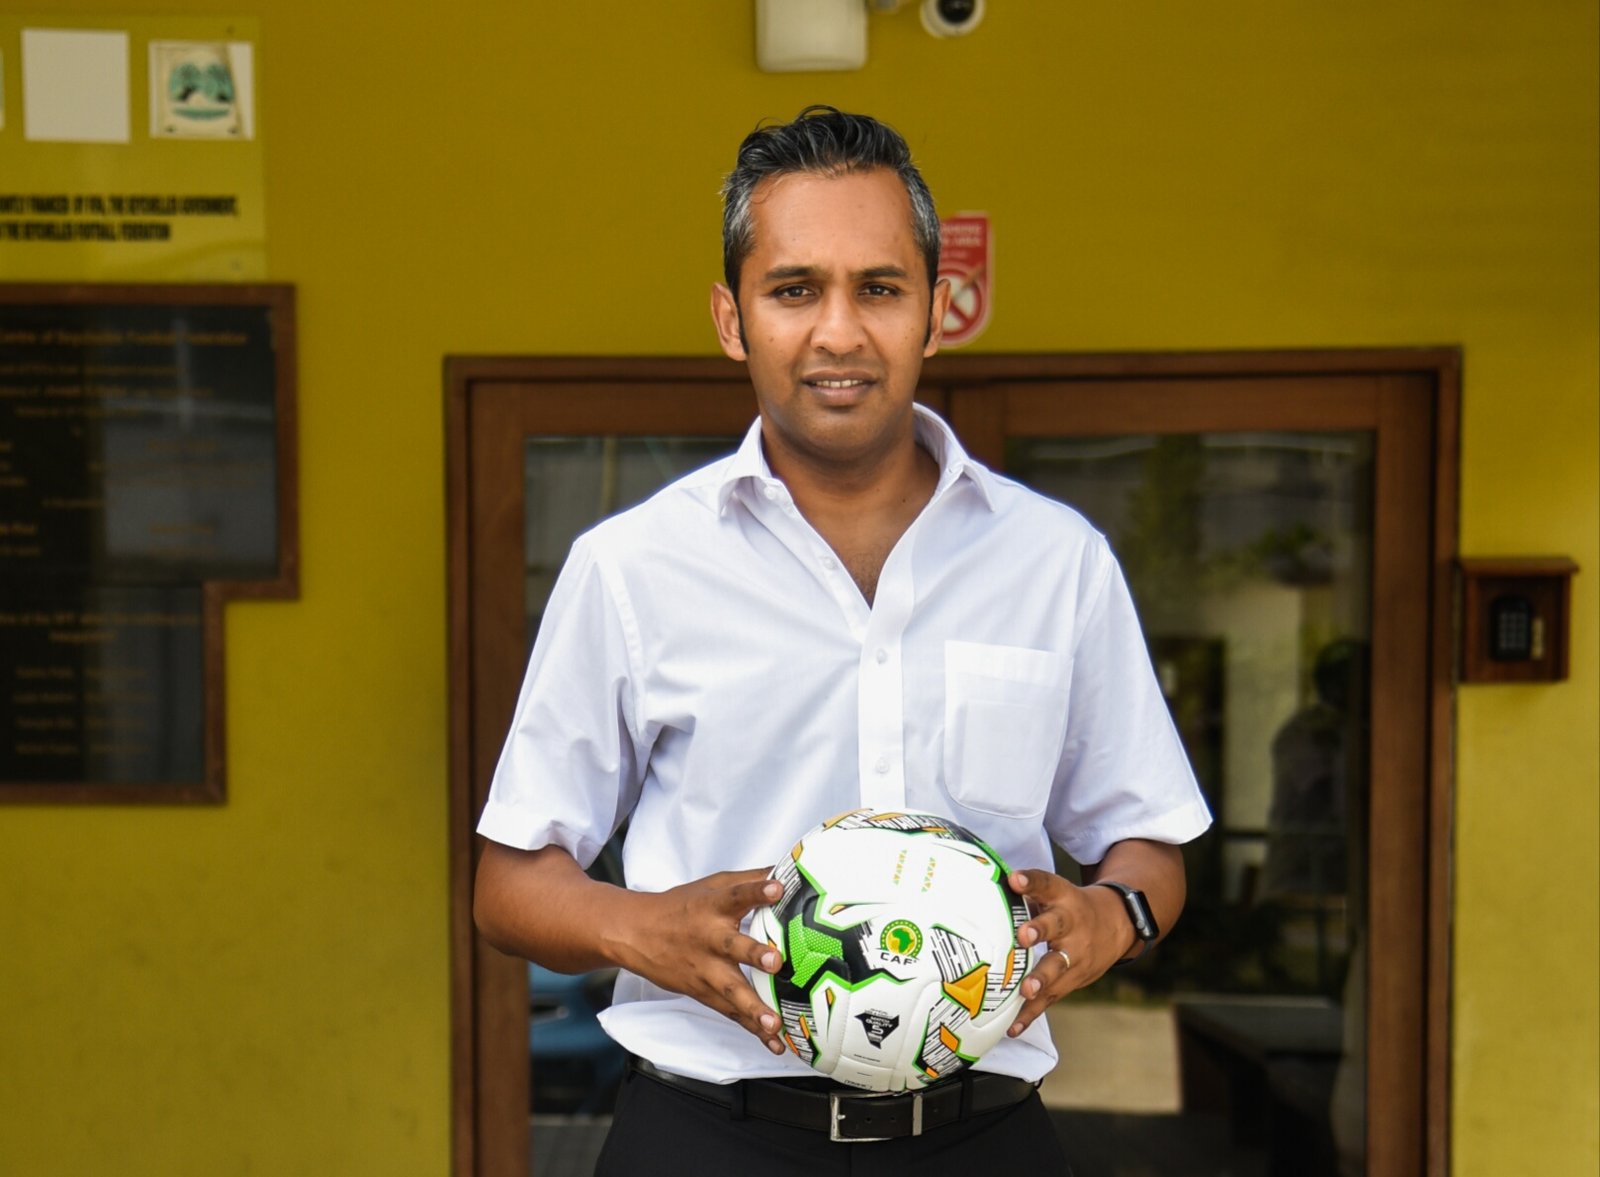 Seychelles football aiming to drive development of women’s game - Sports Leo